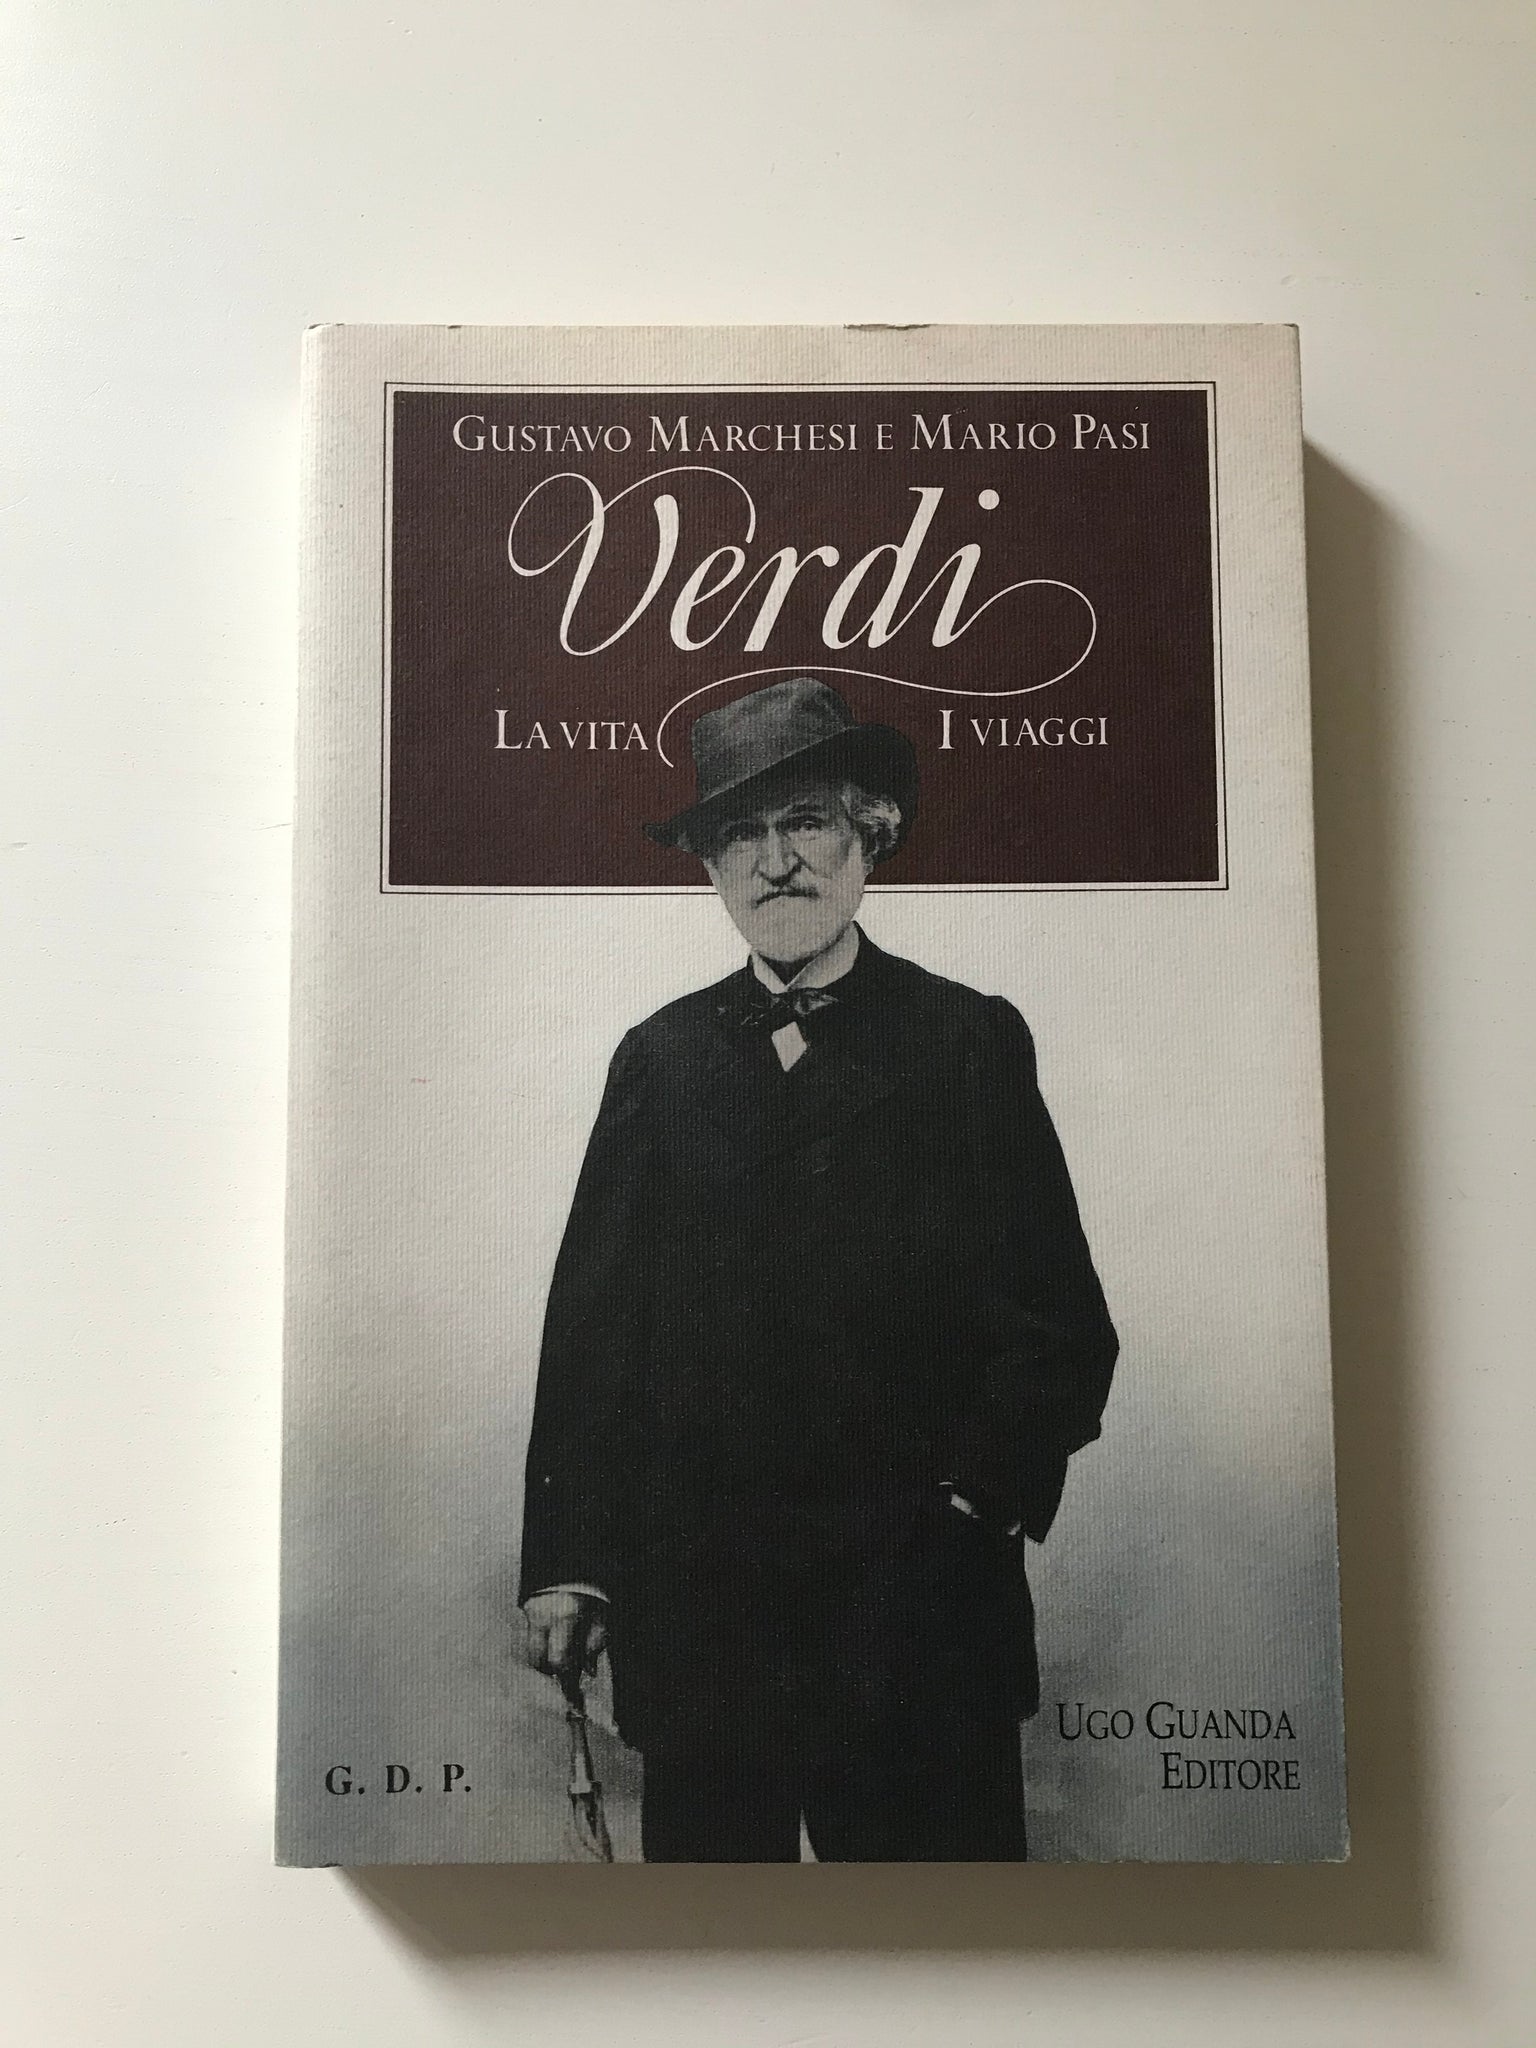 Gustavo Marchesi e Mario Pasi - Verdi la vita i viaggi